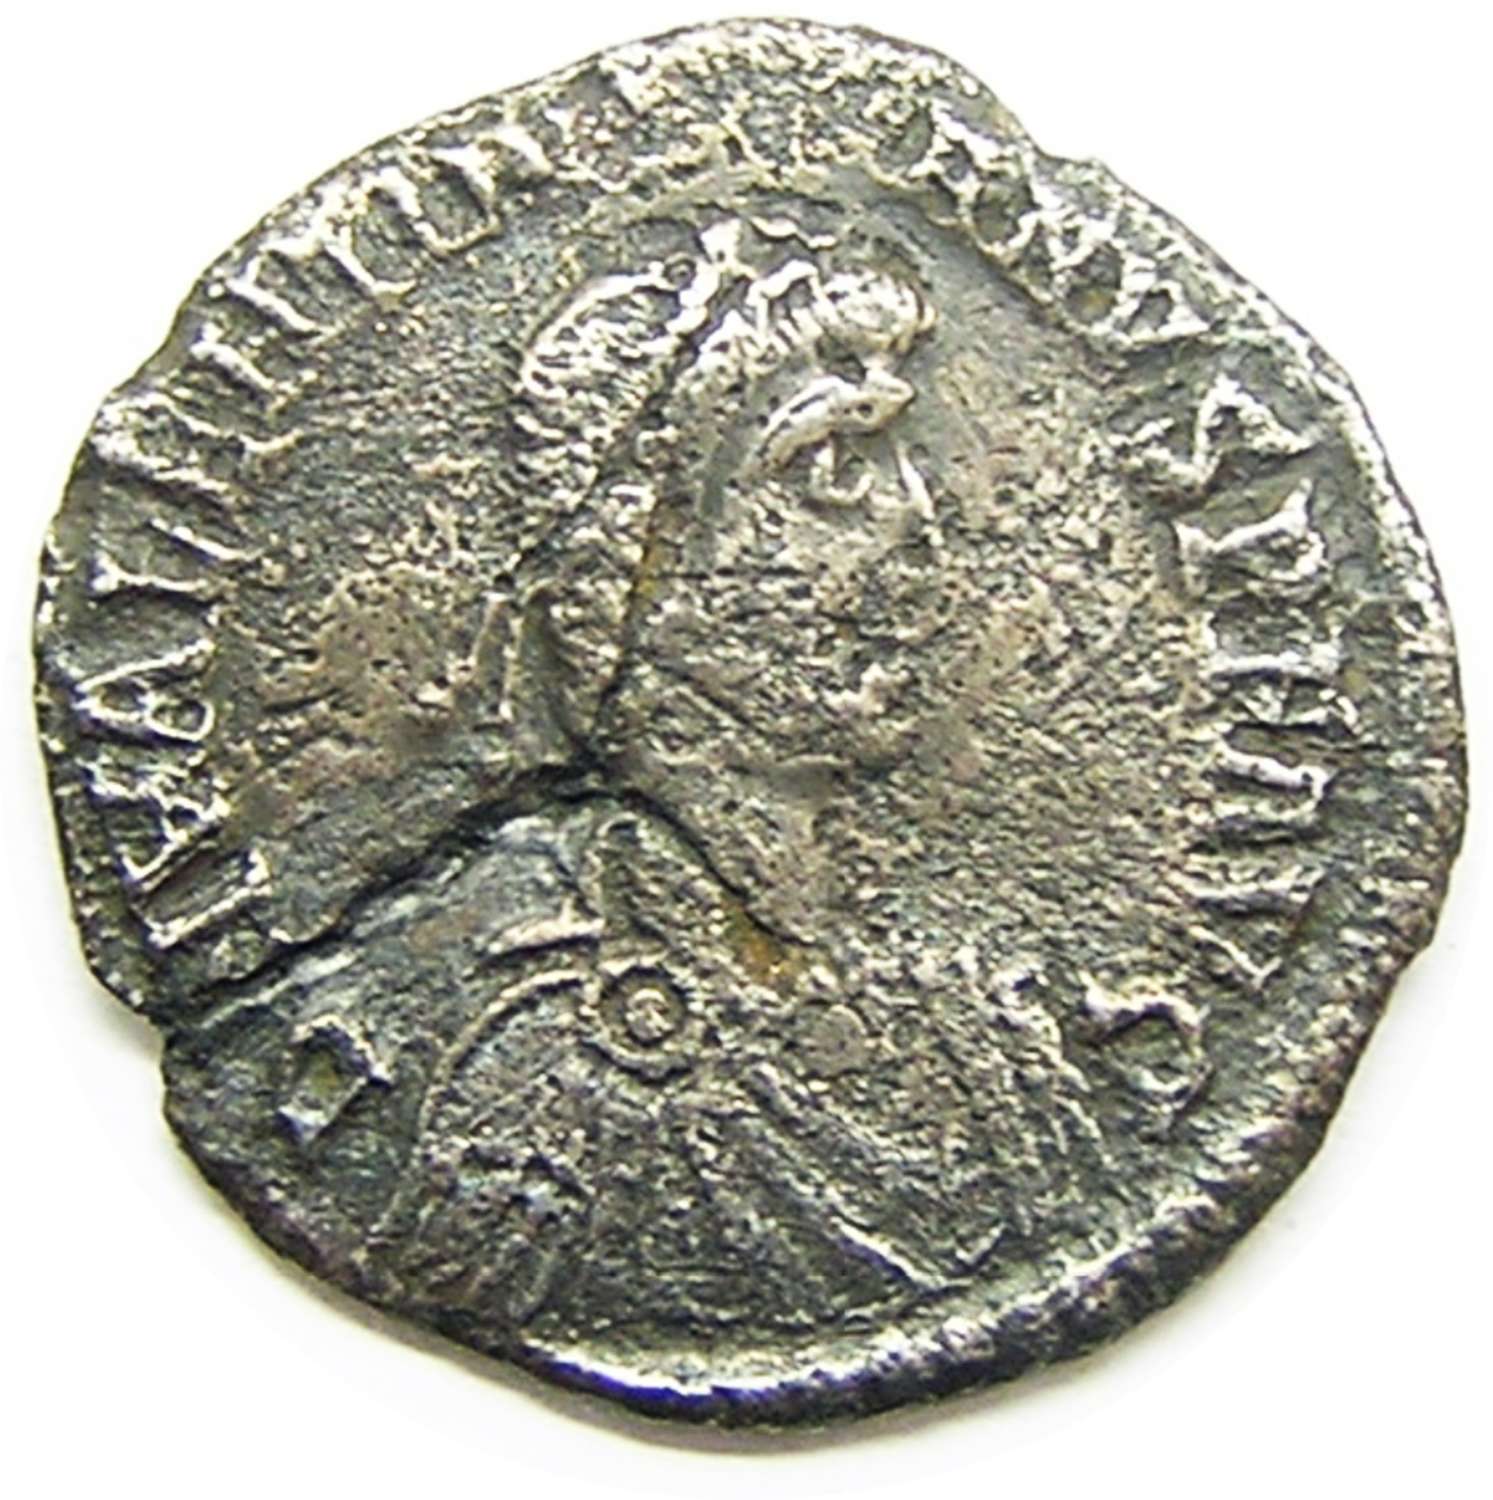 Rare Roman silver light Miliarense of Valentinian II